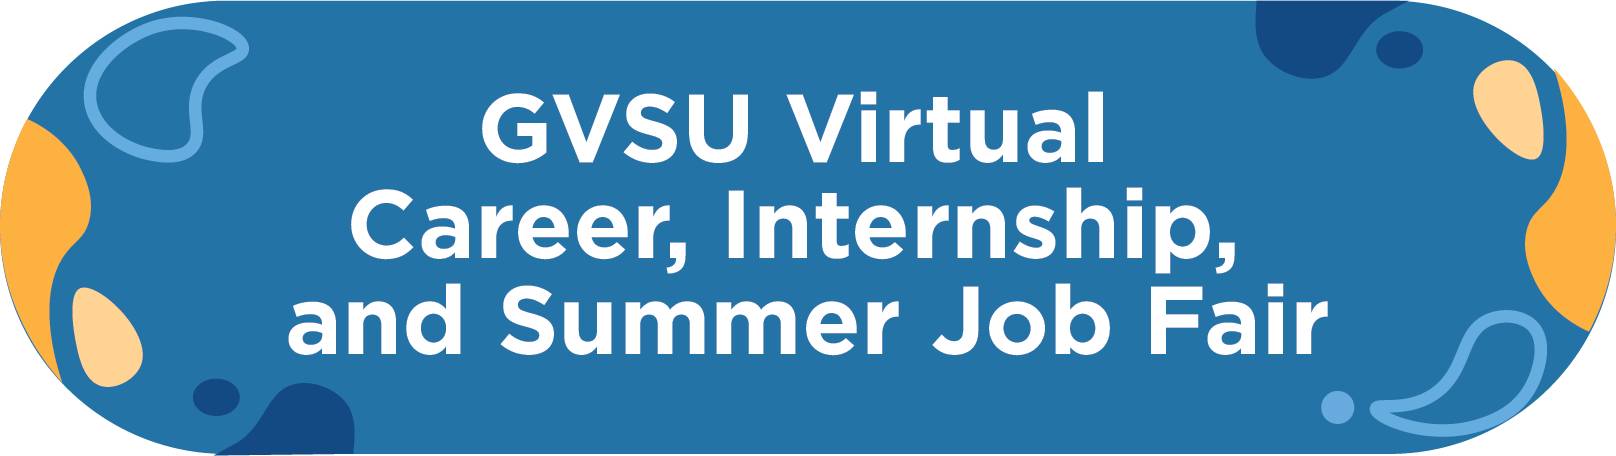 GVSU Virtual Career, Internship, and Summer Job Fair button